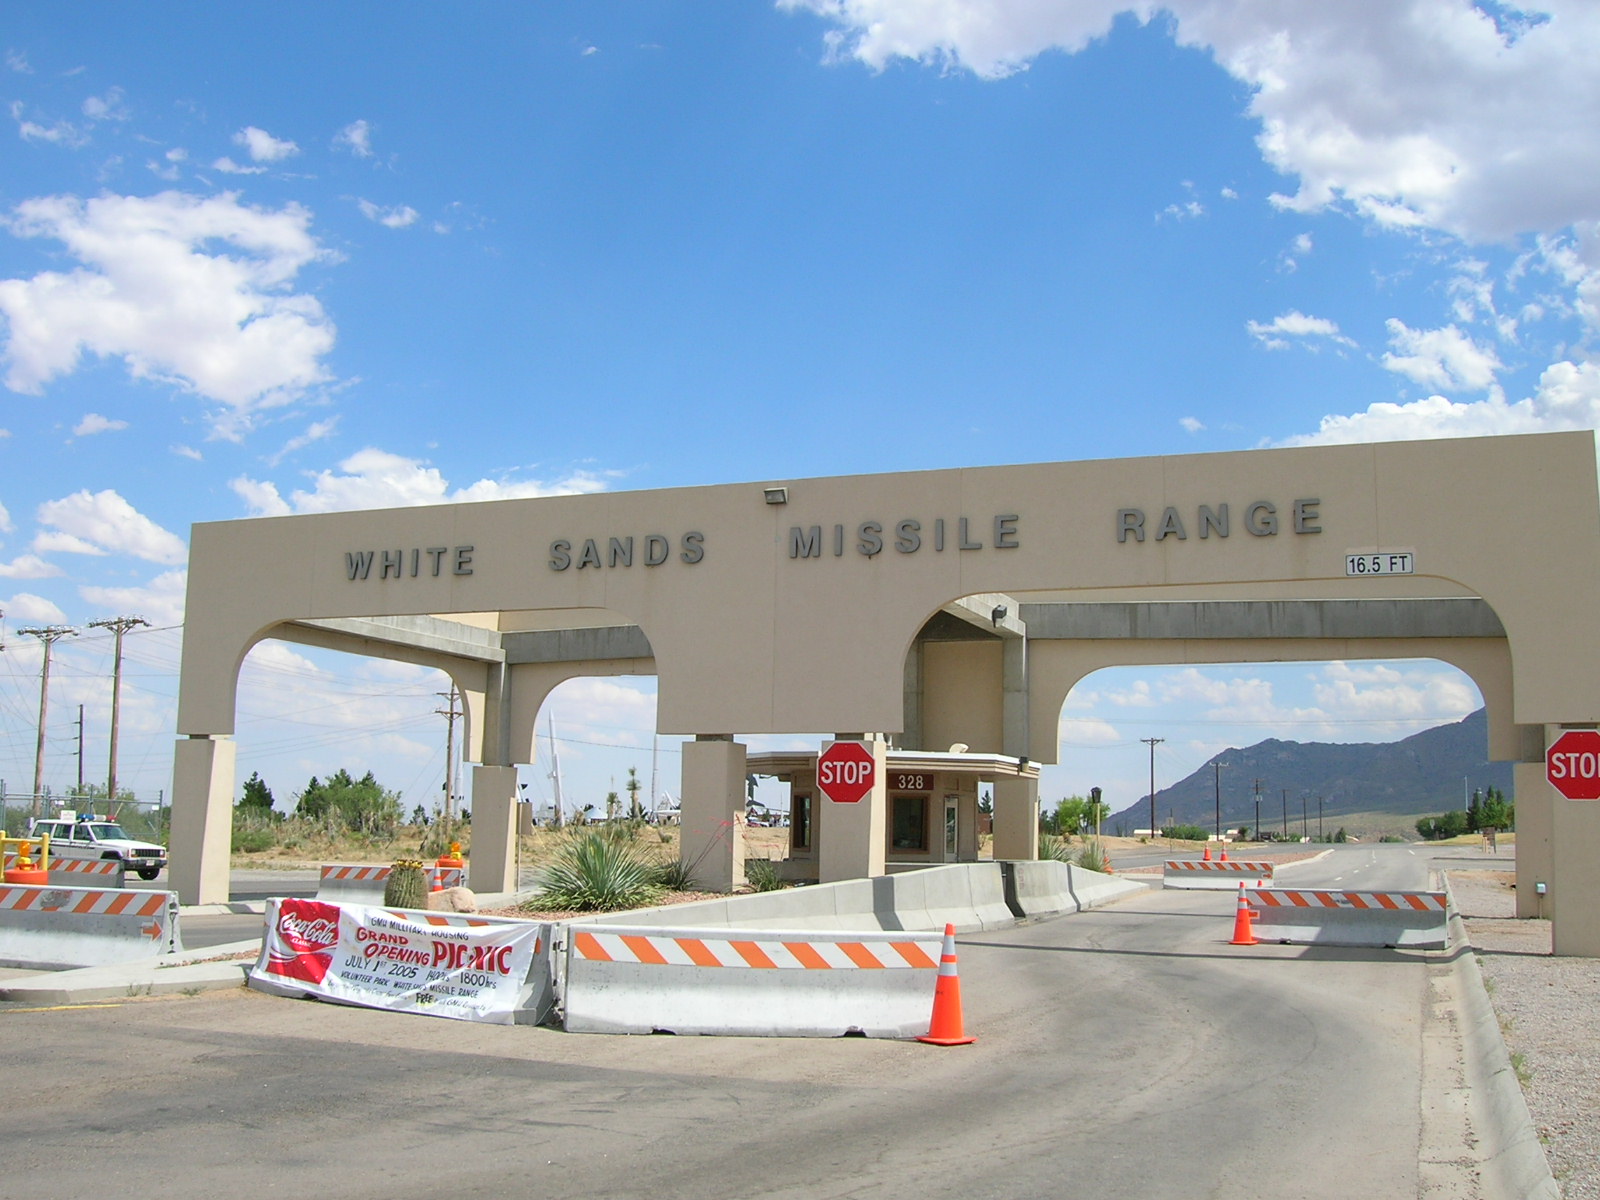 White Sands Missle Test Range